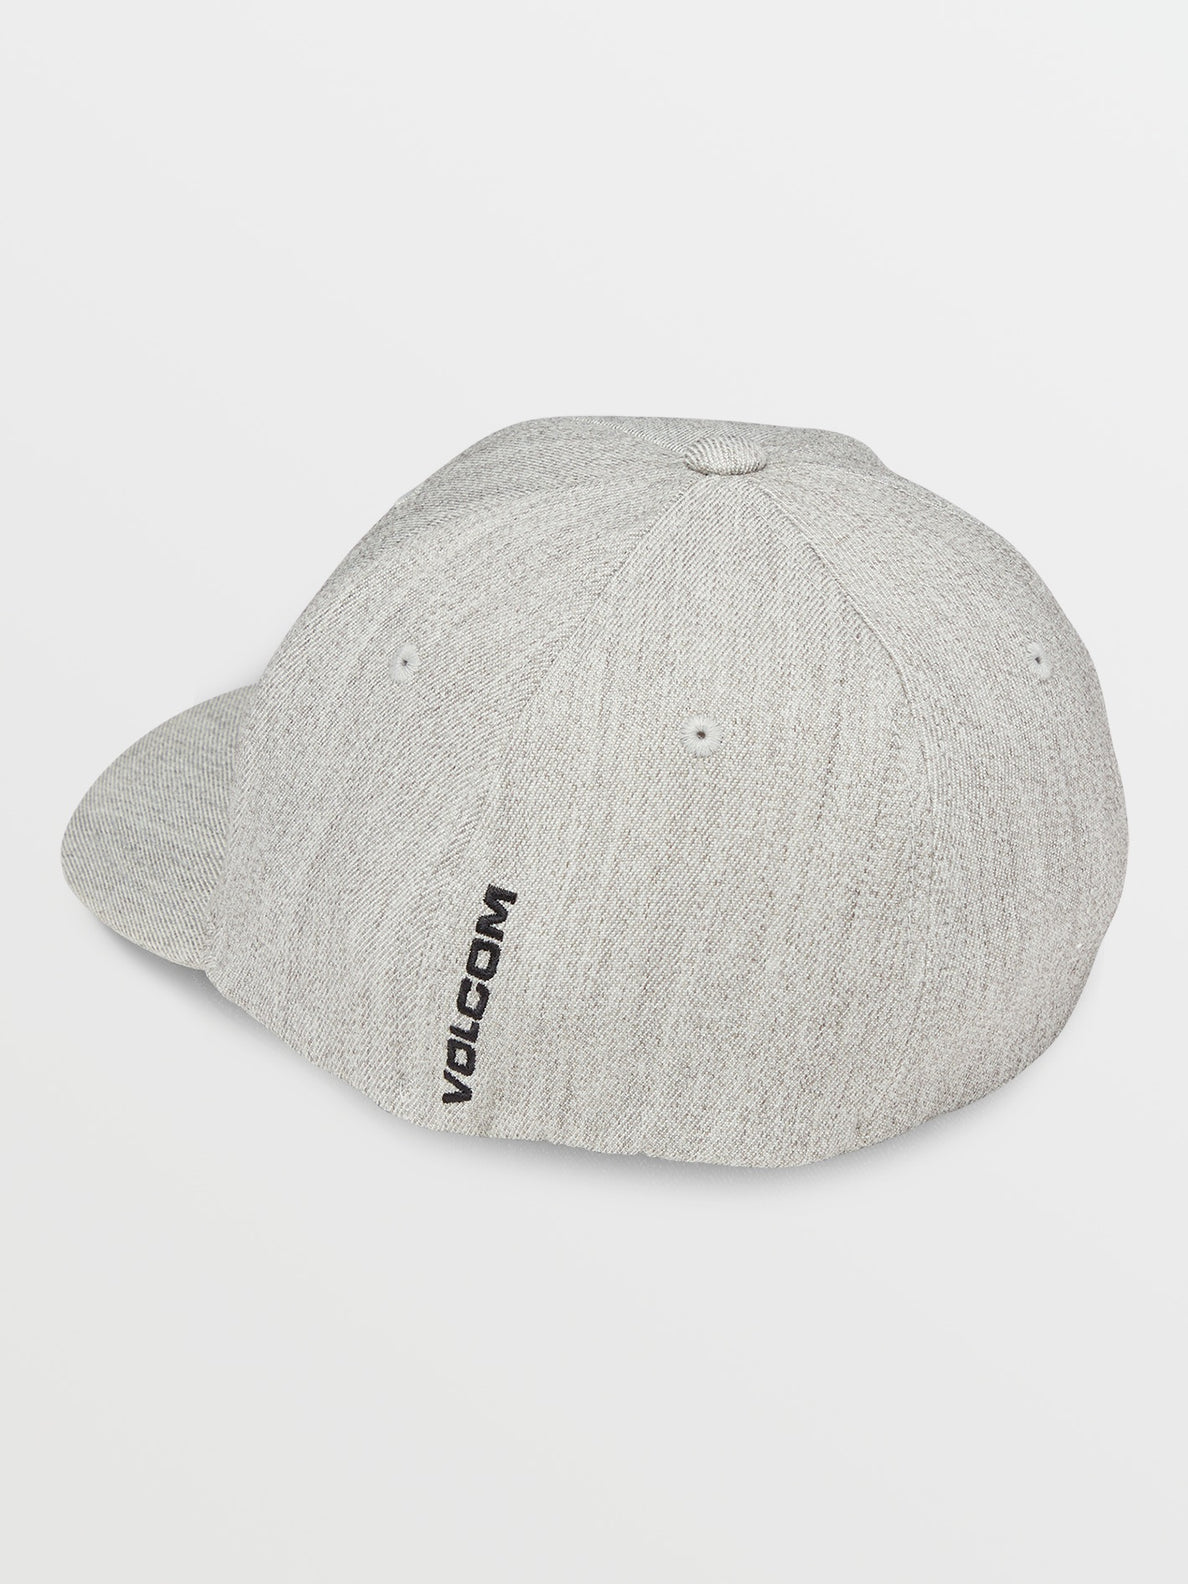 Full Stone Heather Flexfit – Grey Volcom US Hat - Vintage